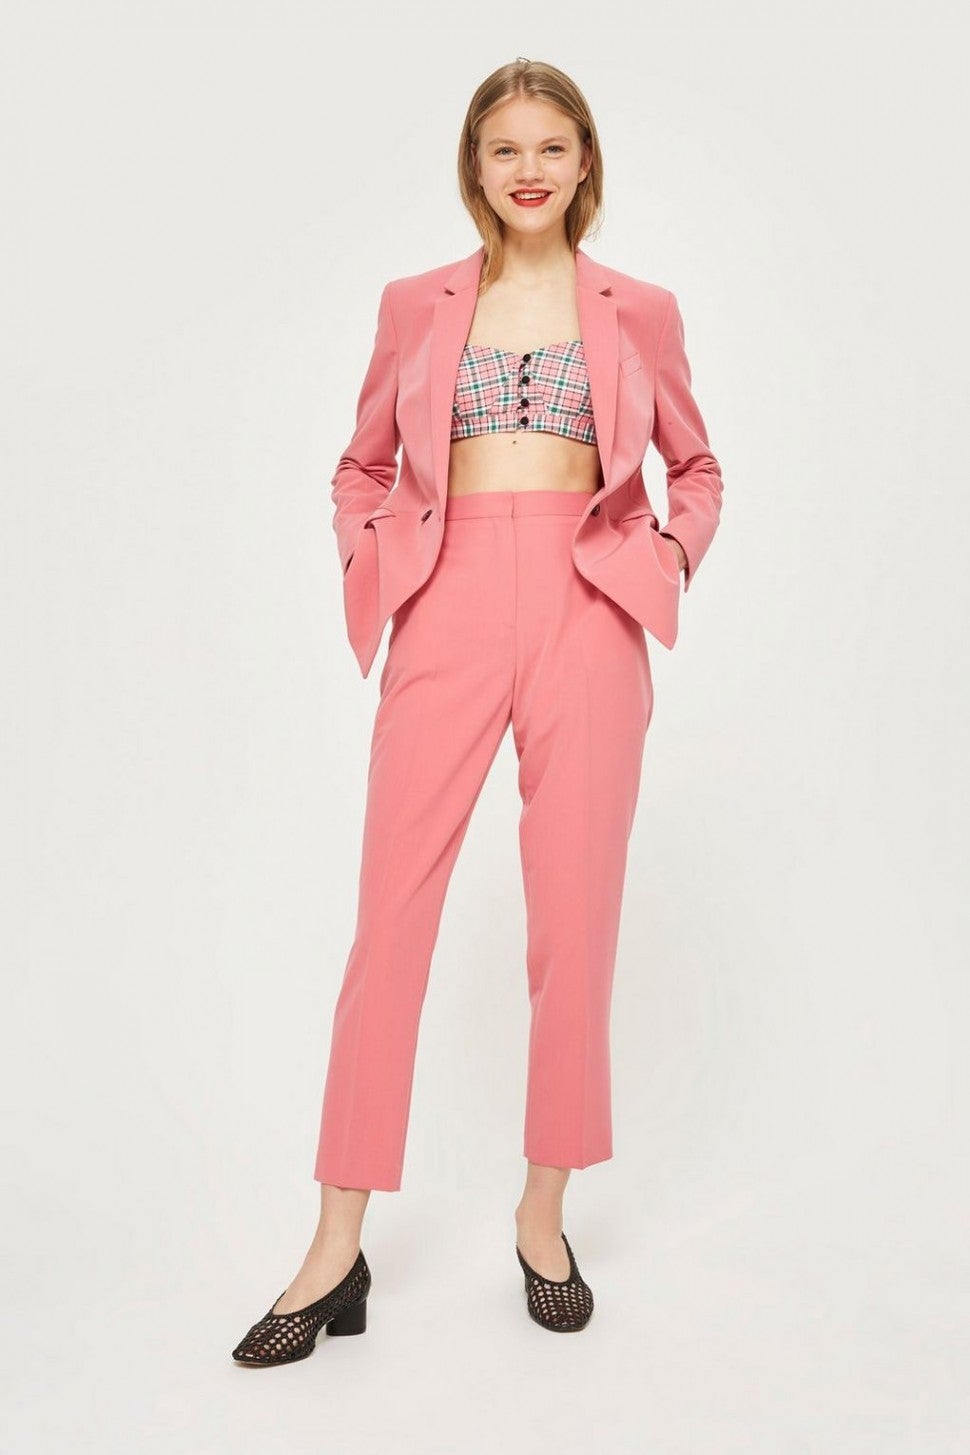 Topshop pink pantsuit